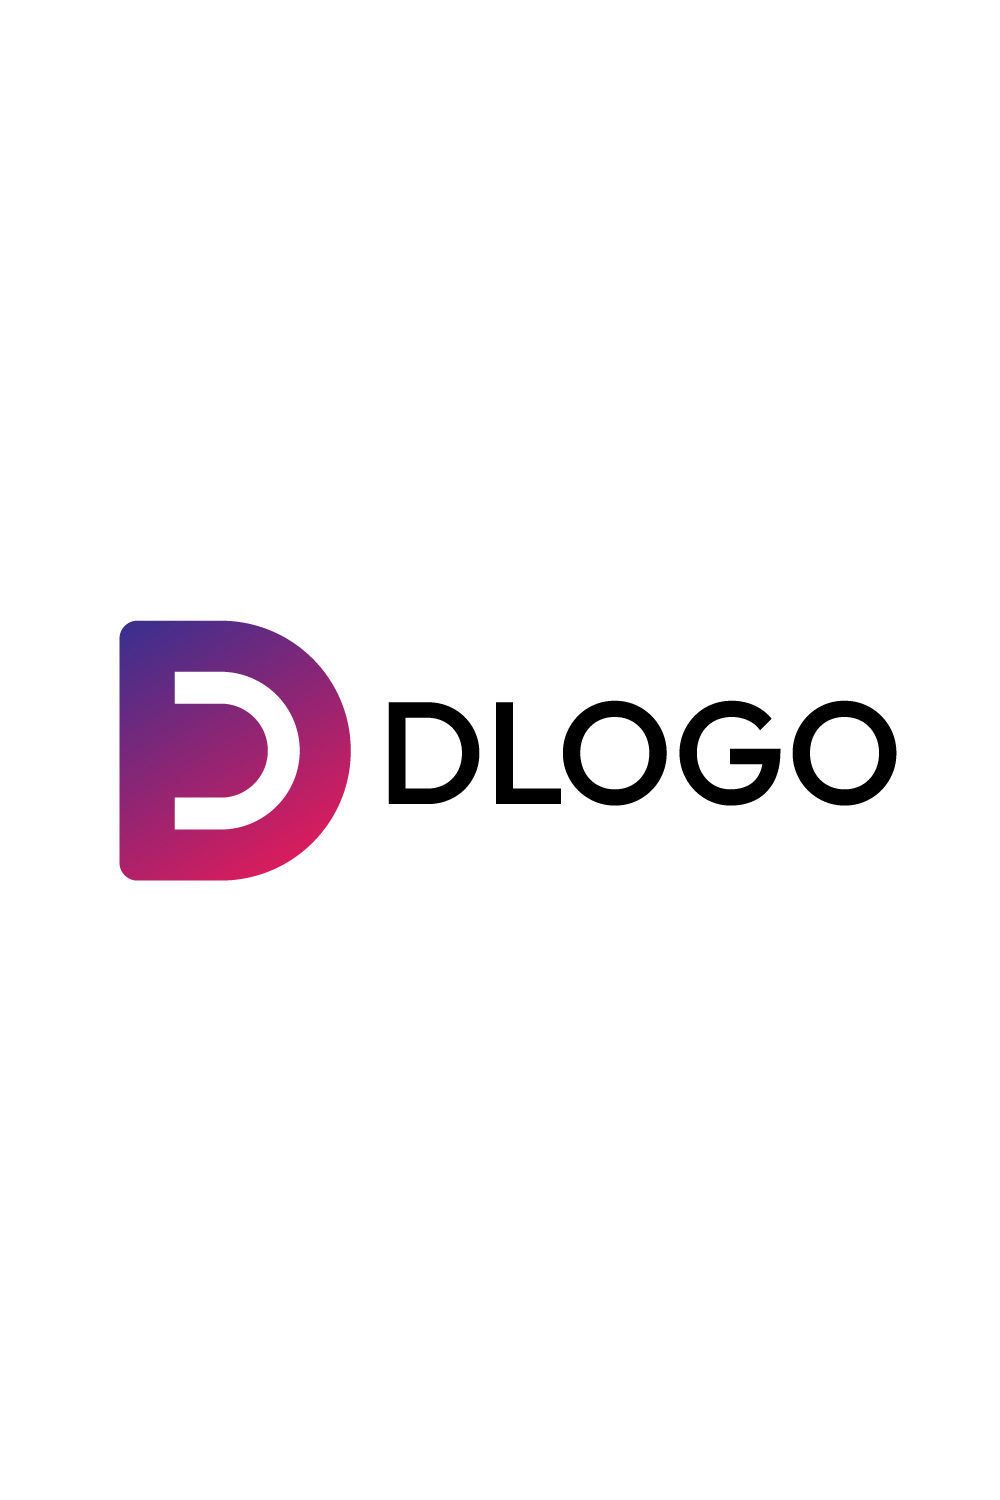 Dynamic D Logo Design Bundle: Elevate Your Brand Identity! pinterest preview image.